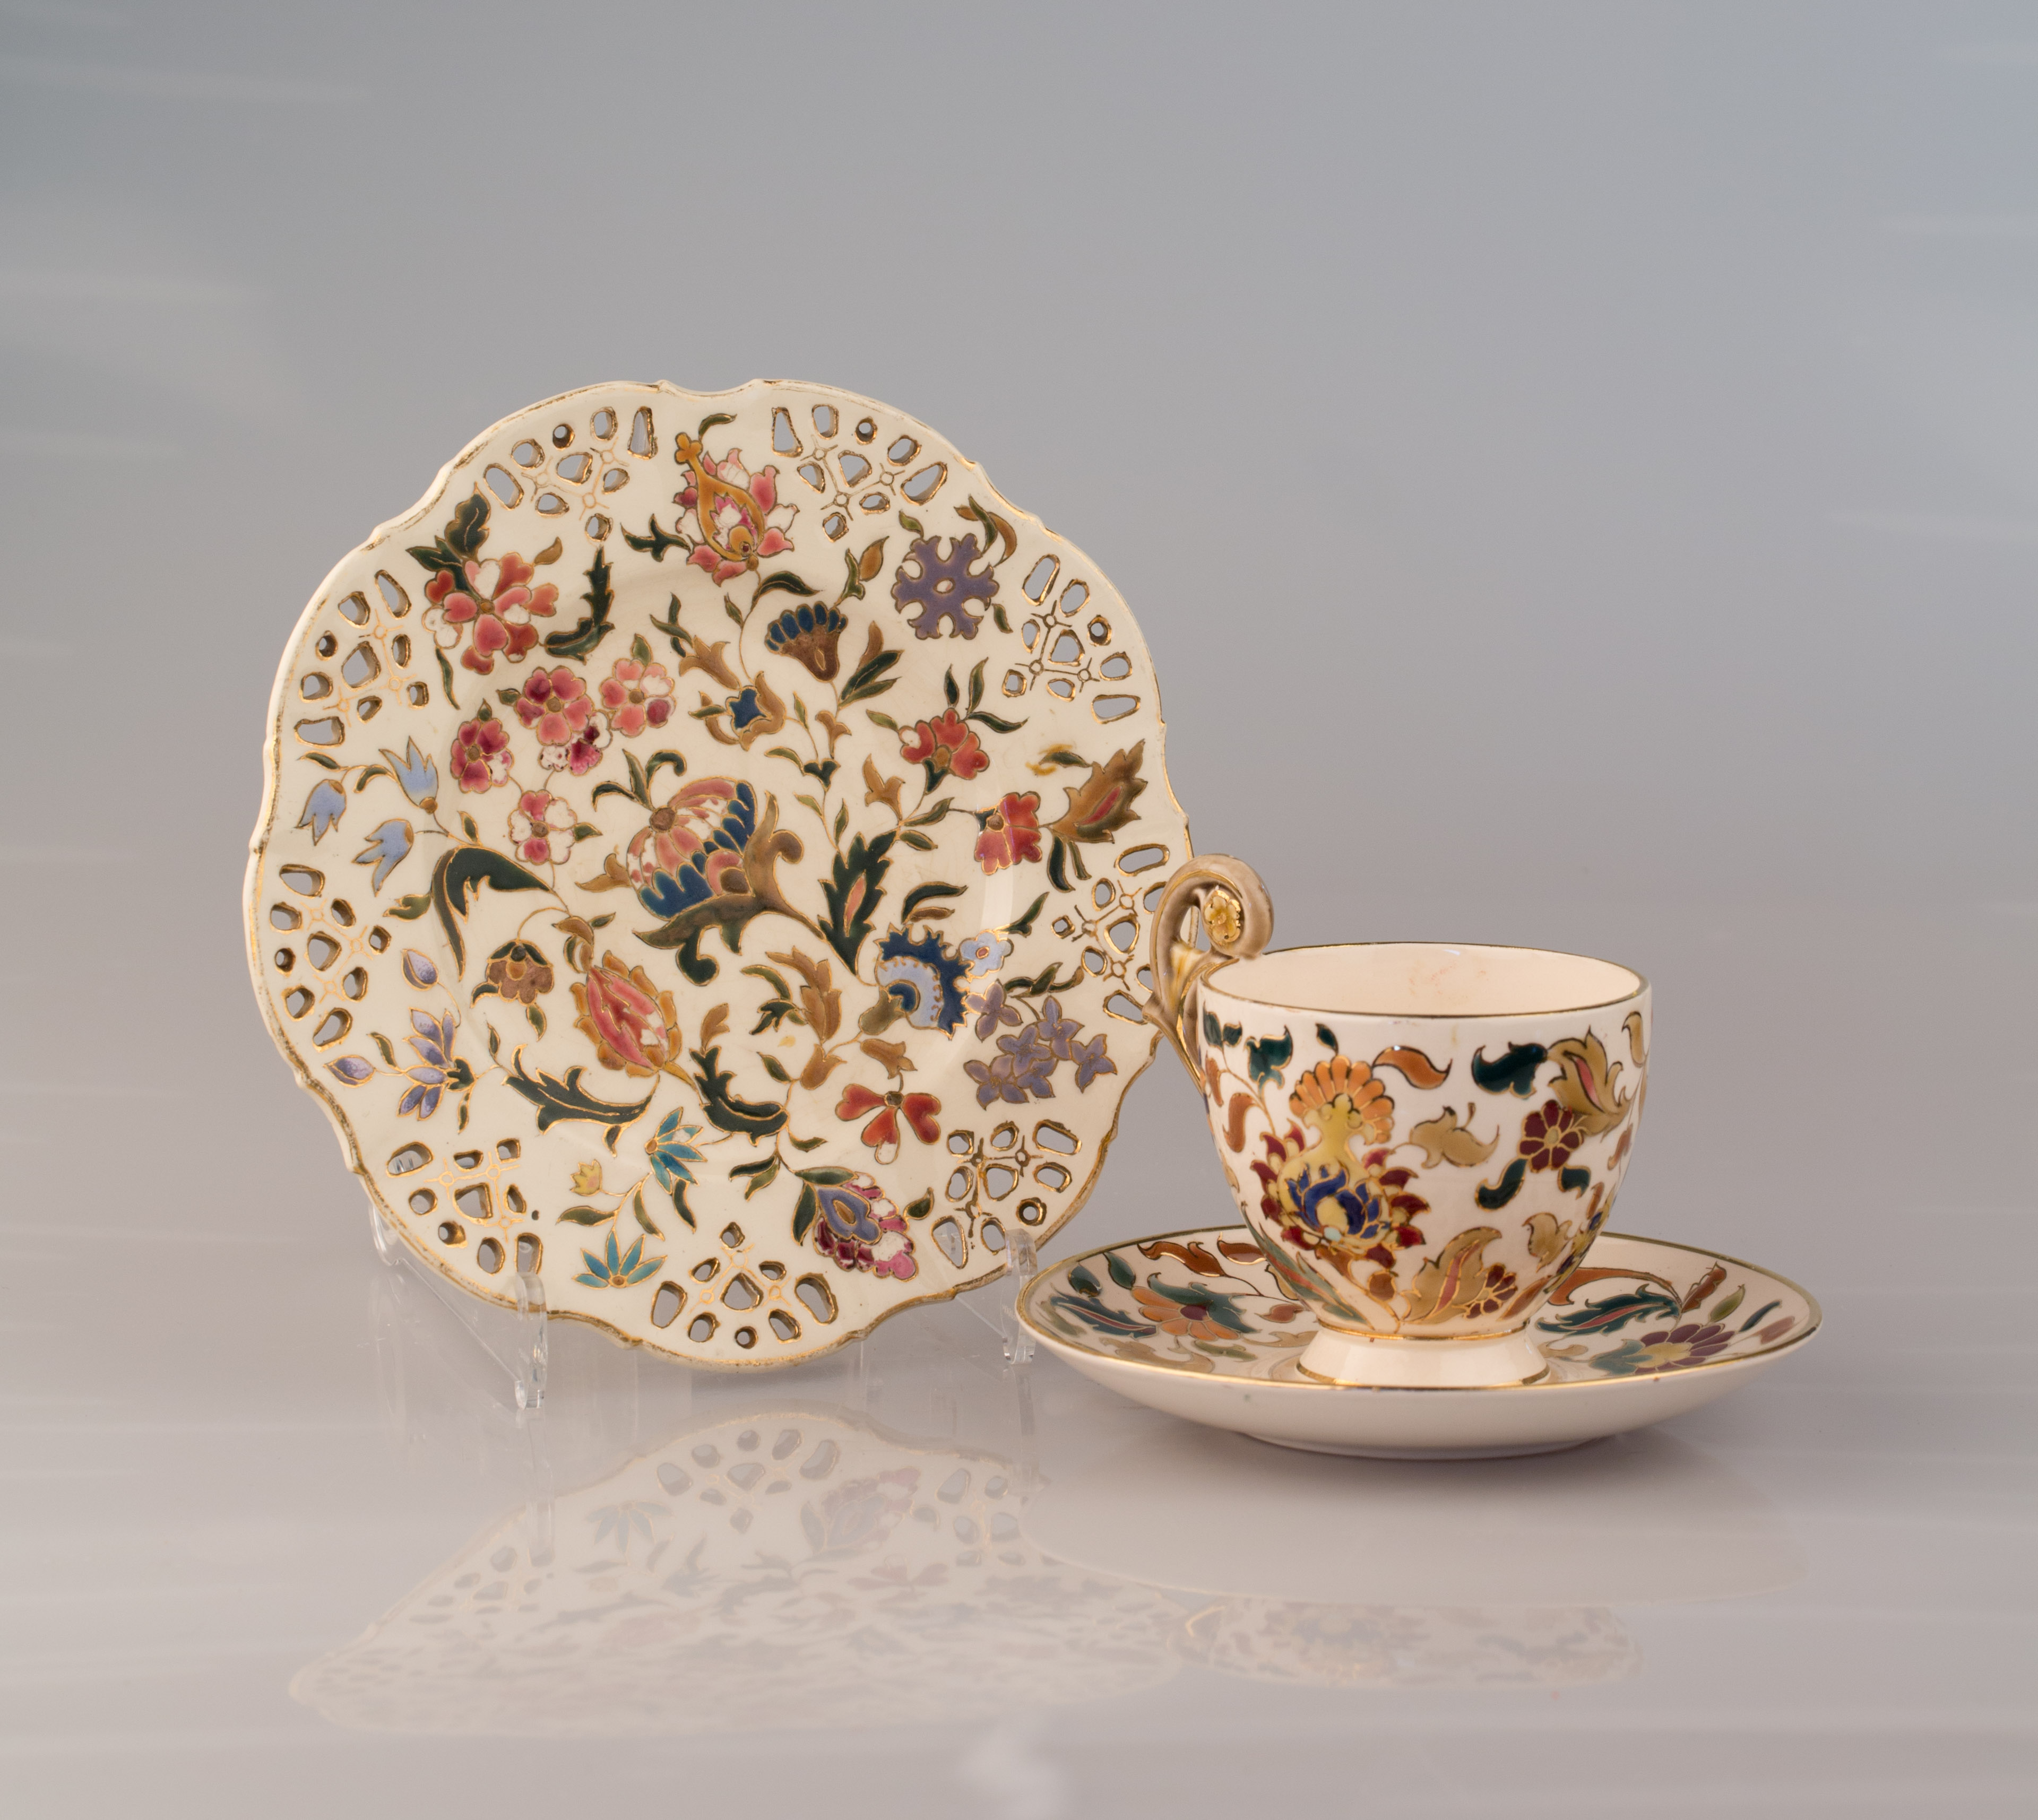 20140707 Radkersburg - Ceramic cups (Gombosz collection) - H3766